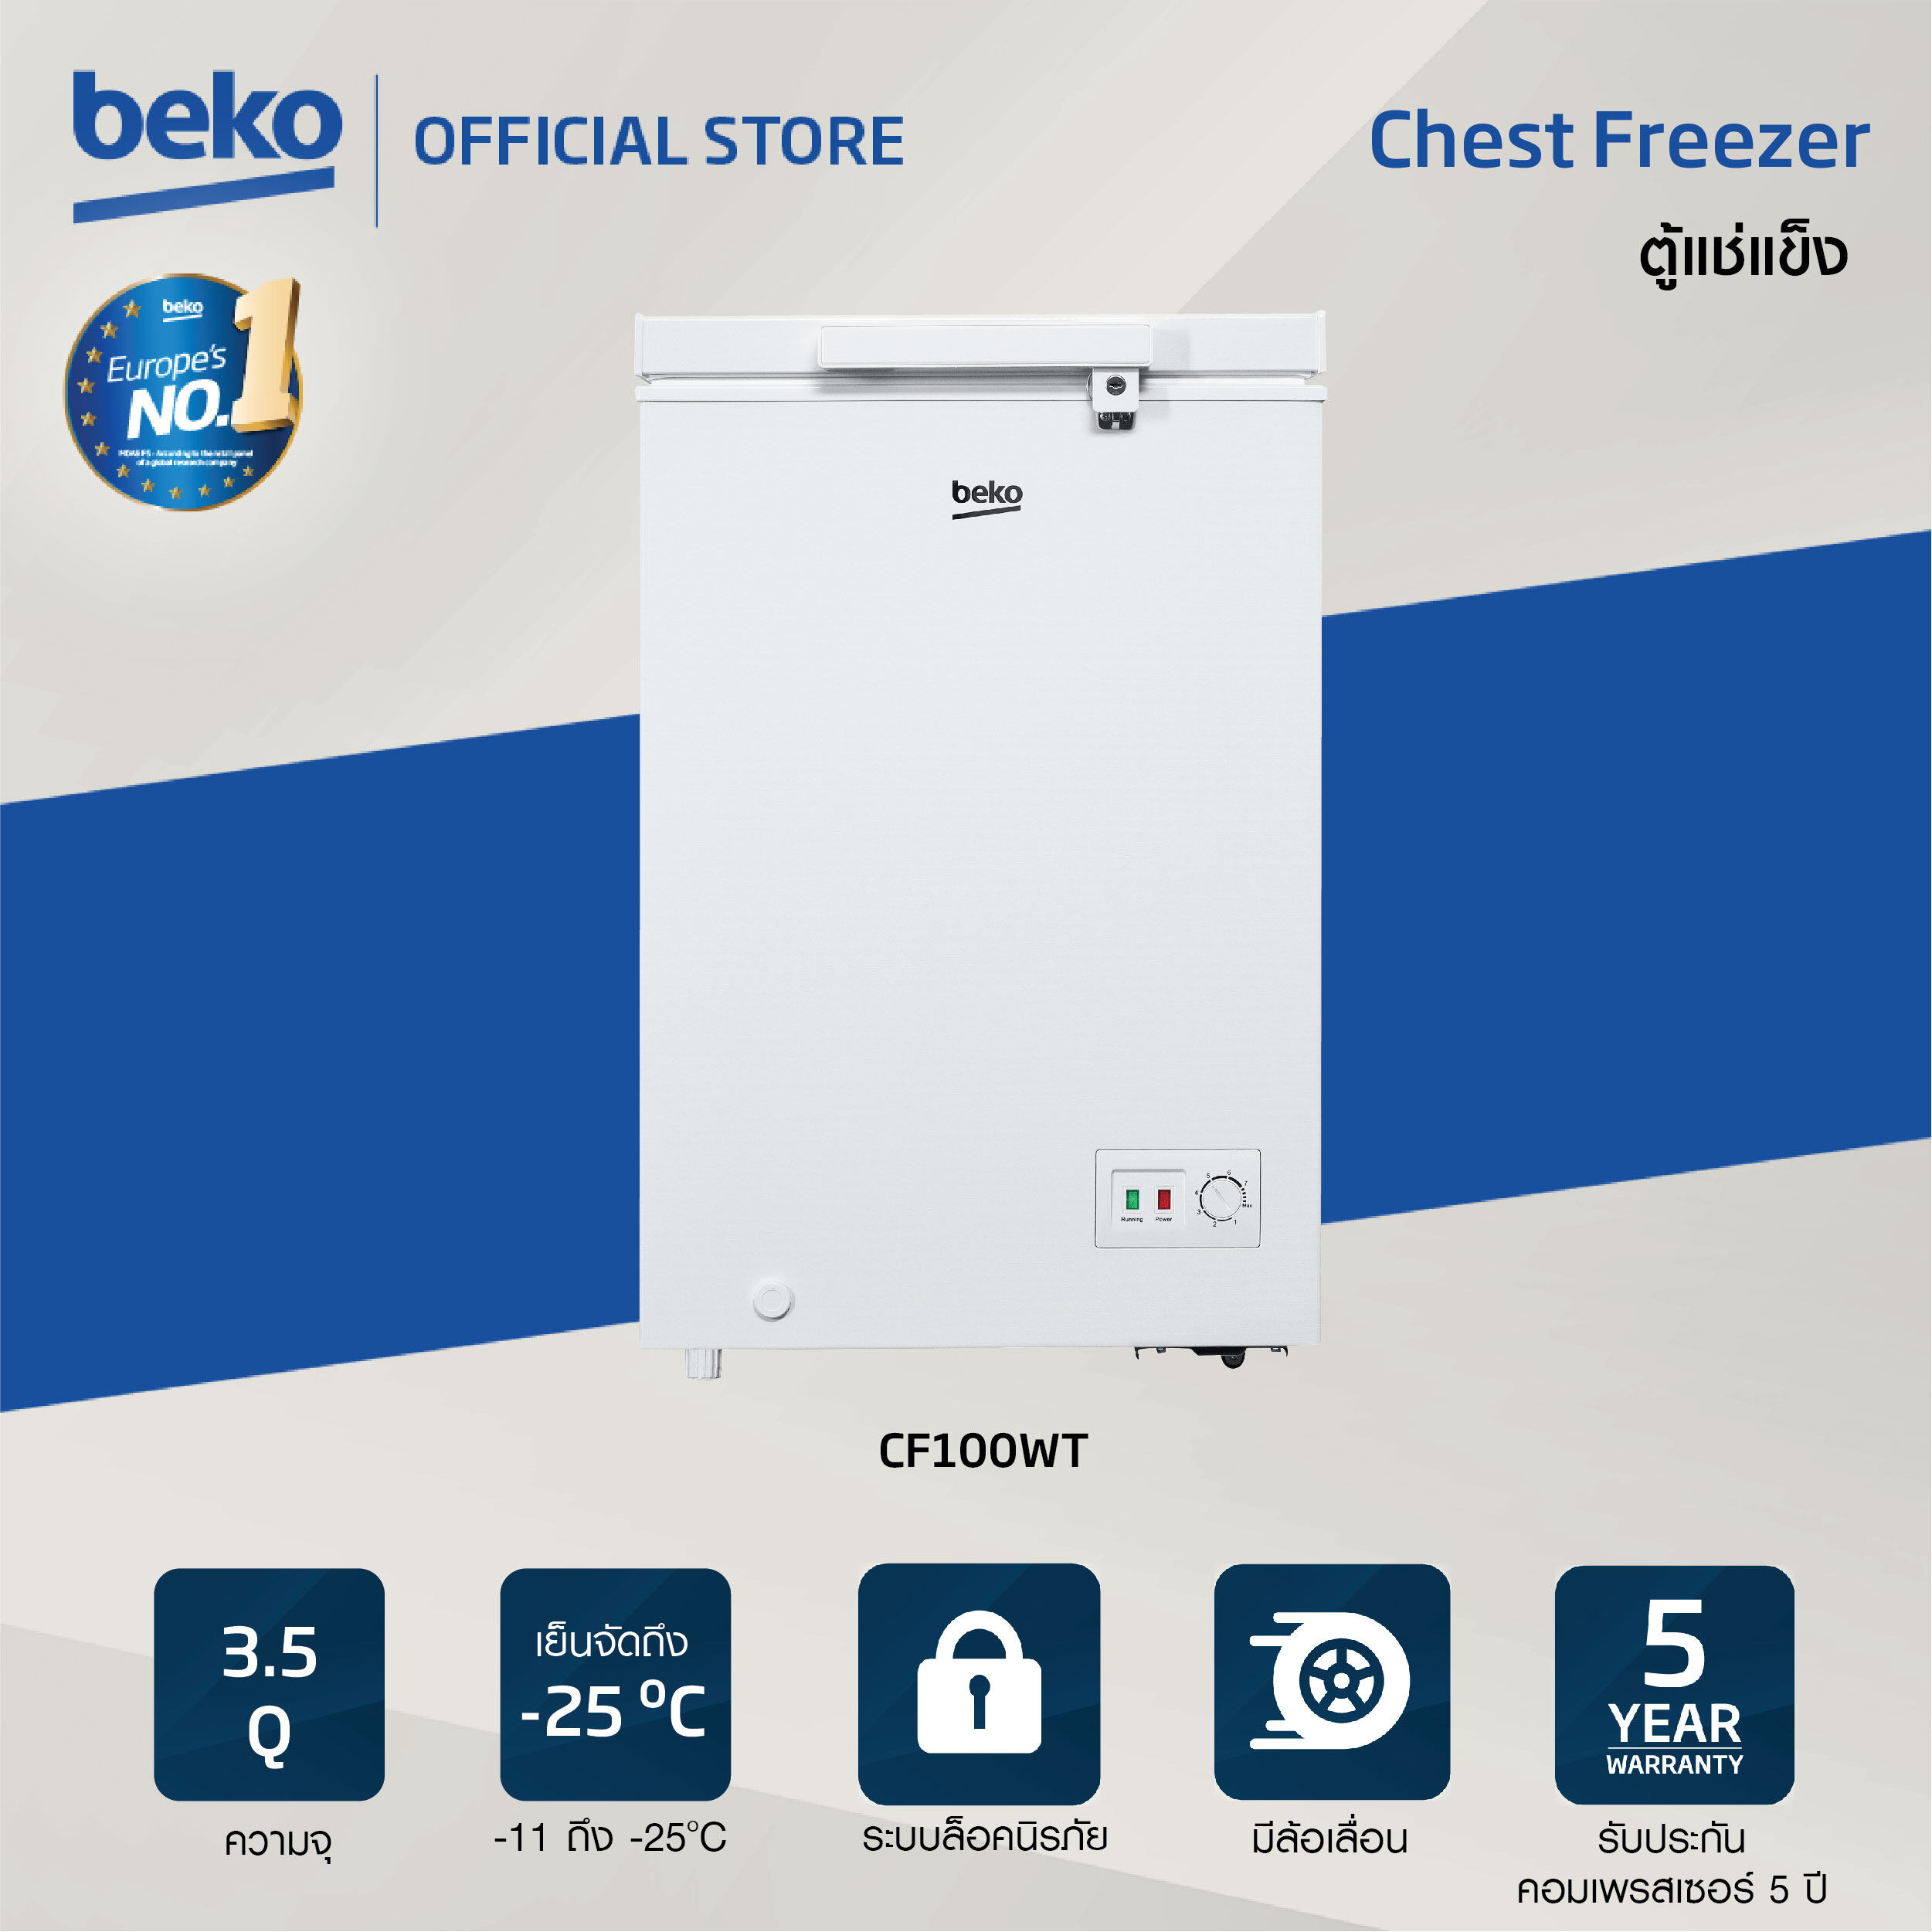 Beko ตู้แช่แข็ง Chest Freezer รุ่นCF100WT ความจุ3.5 คิว